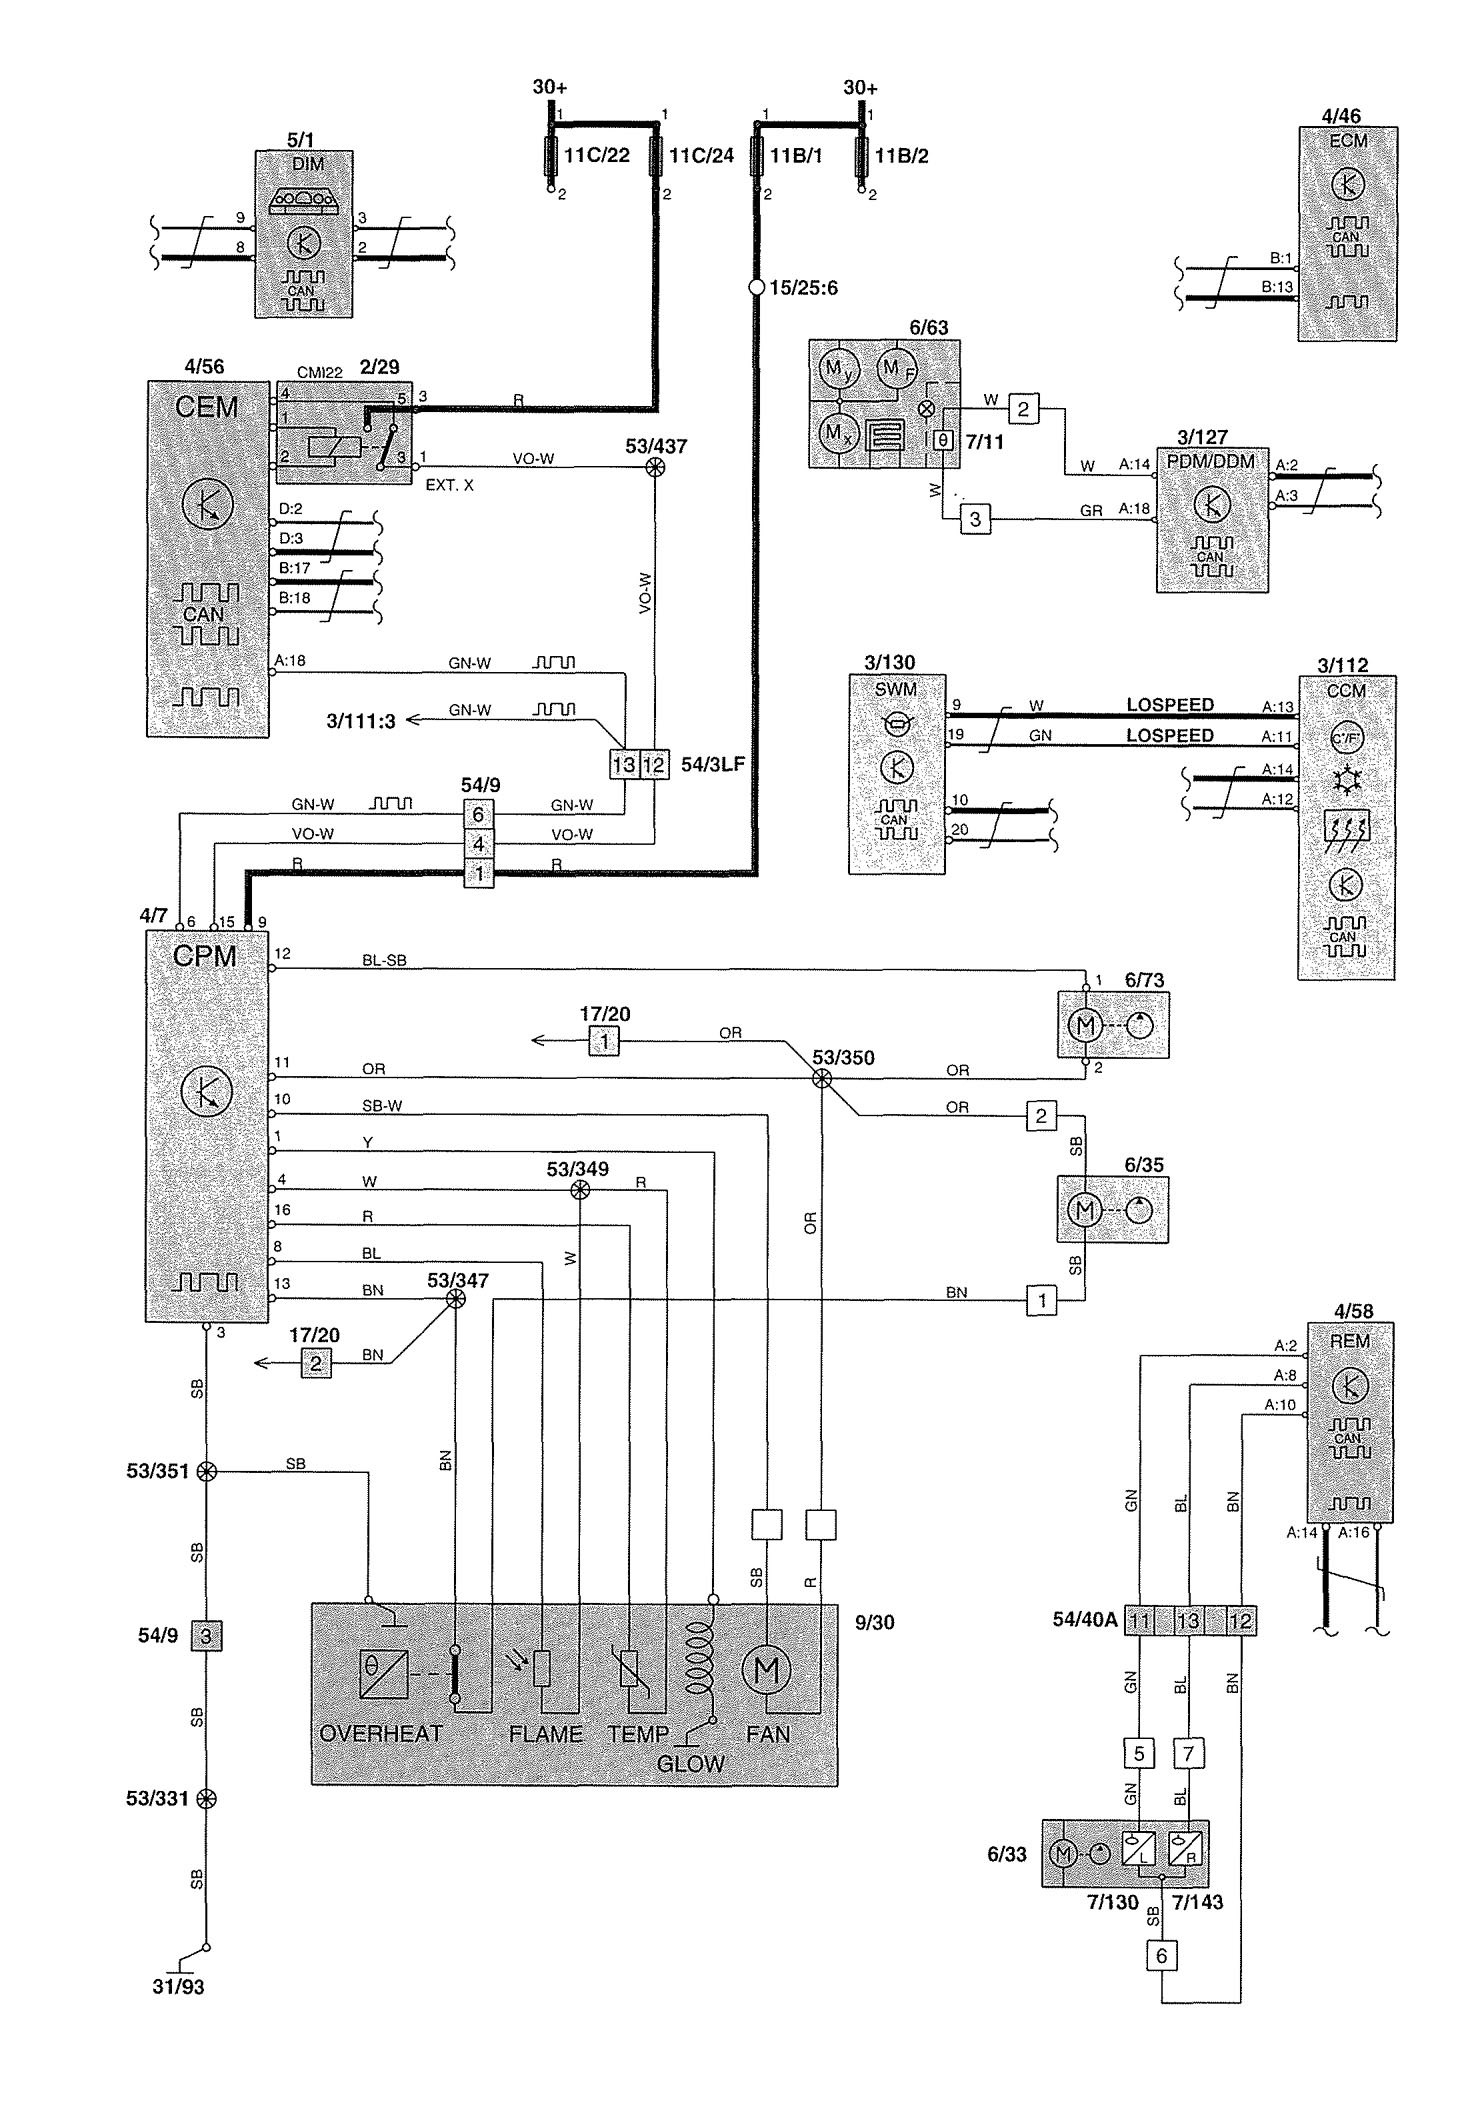 Diagram Honda Vt1100 Wiring Diagram Full Version Hd Quality Wiring Diagram Eardiagrams Eracleaturismo It